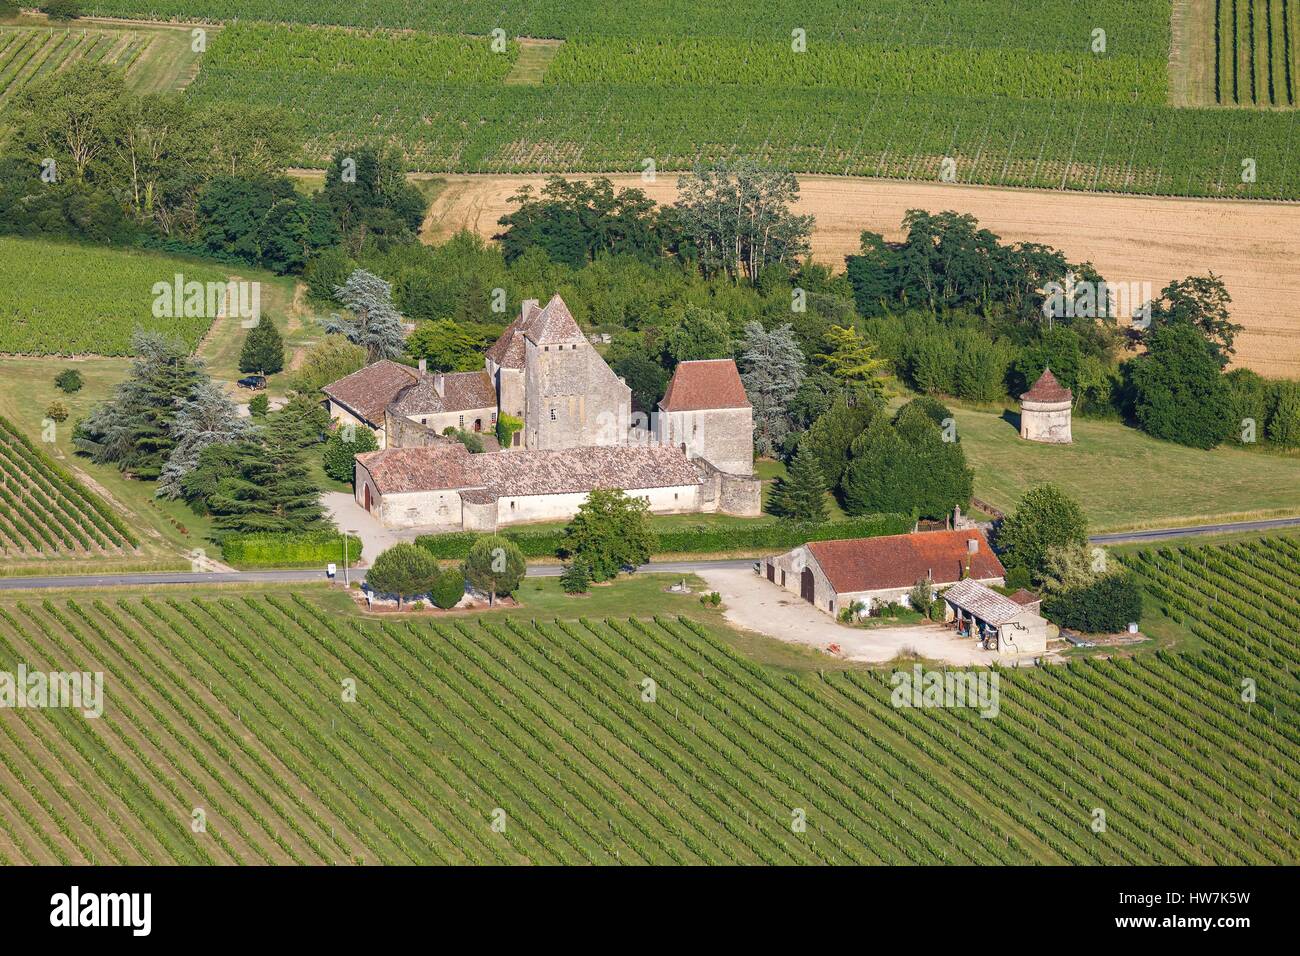 France, Gironde, Loubens, Lavison castle surrounded by Entre deux Mers vineyards (aerial view) Stock Photo